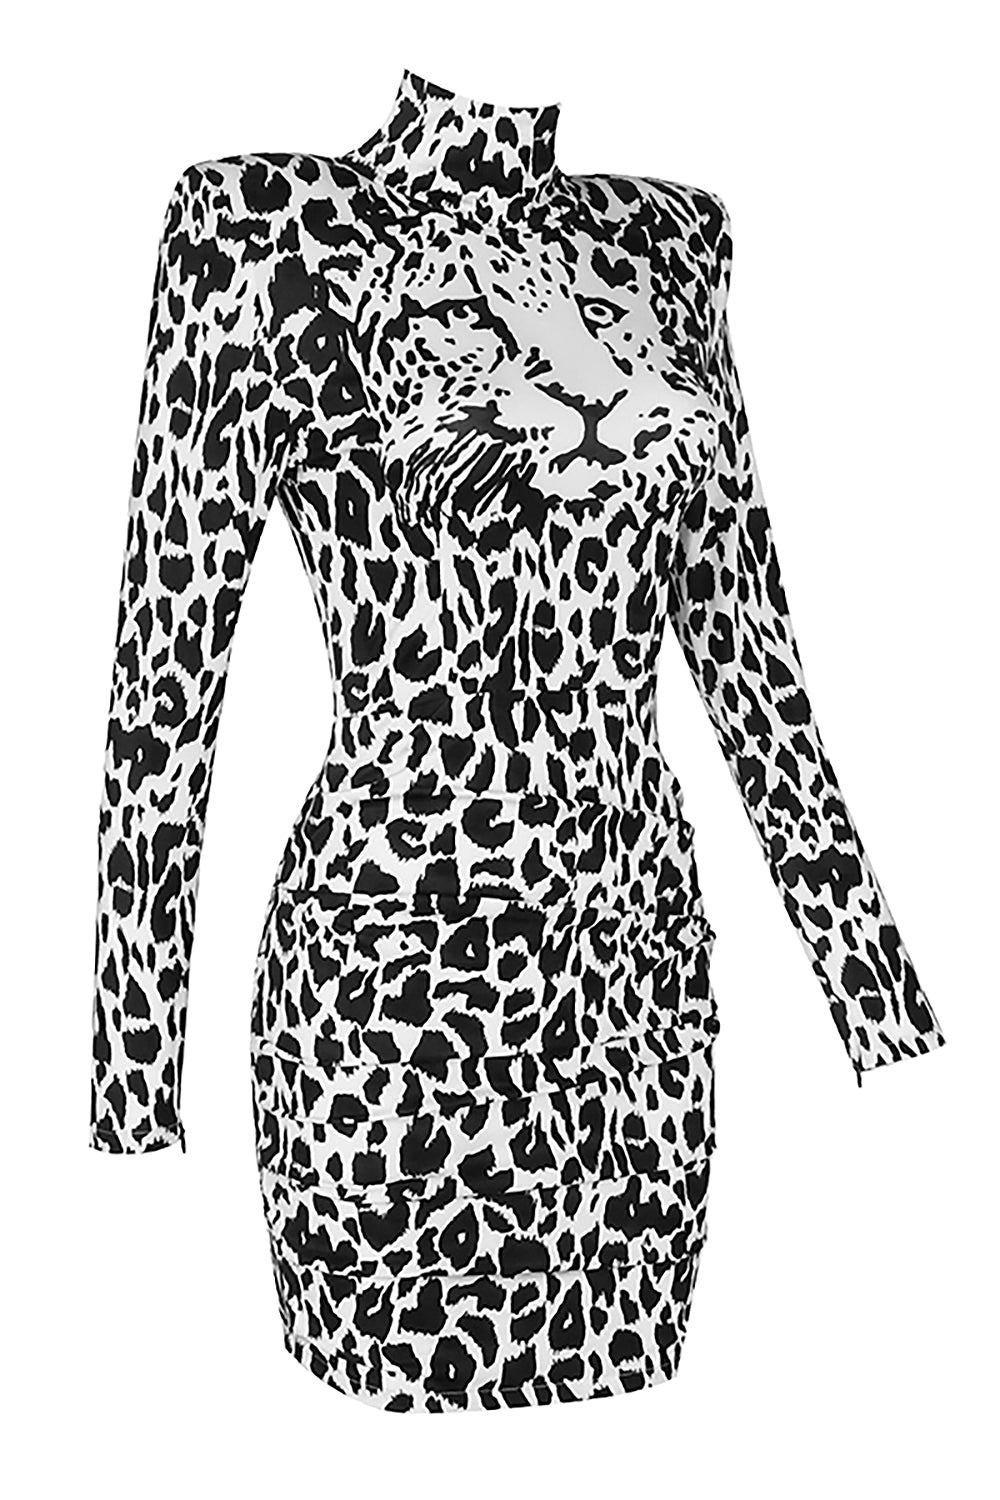 Leopard Print Long Sleeve Mini Dress